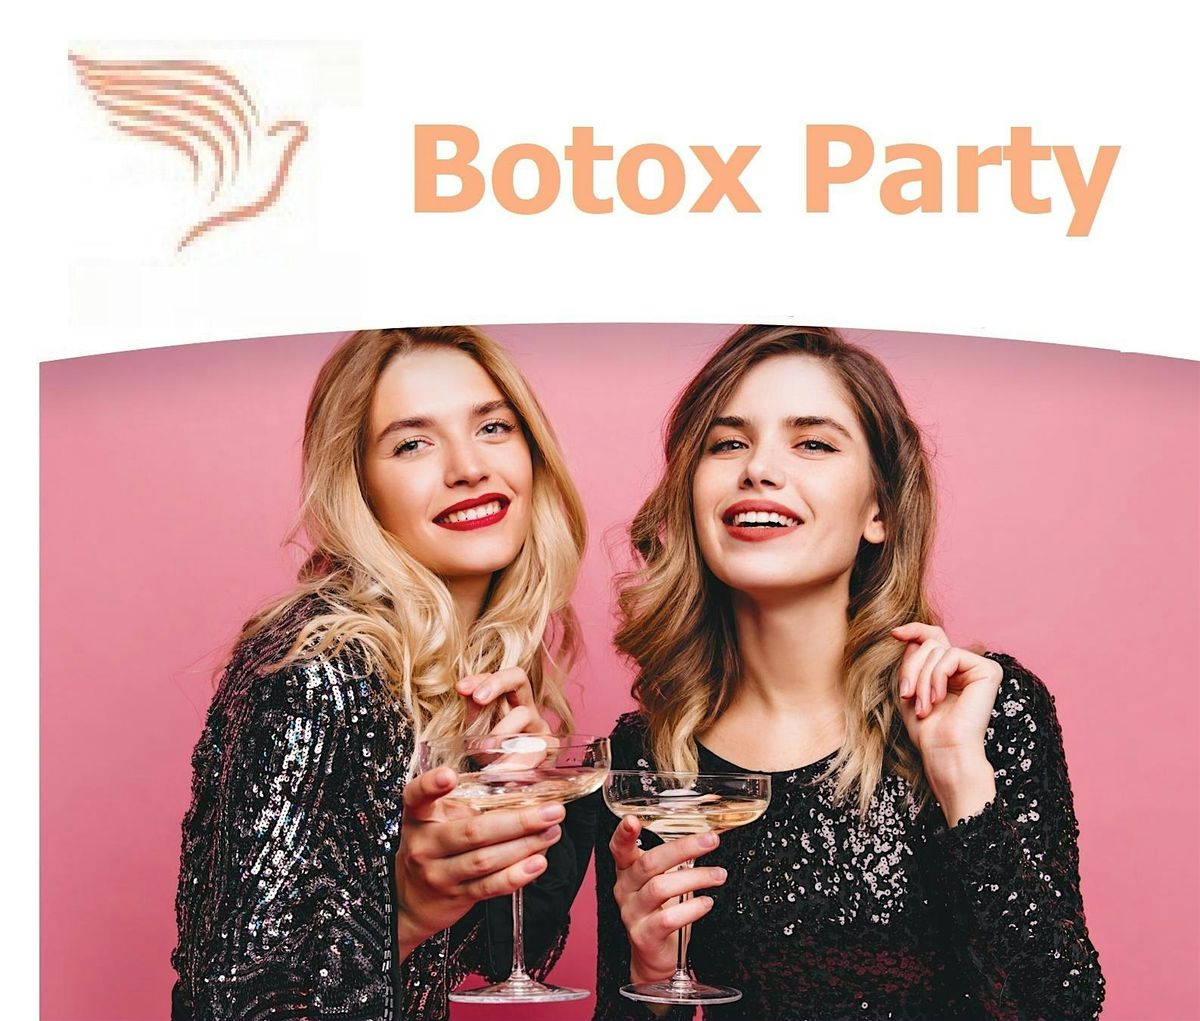 Botox Party at SalamaMD Aesthetics!